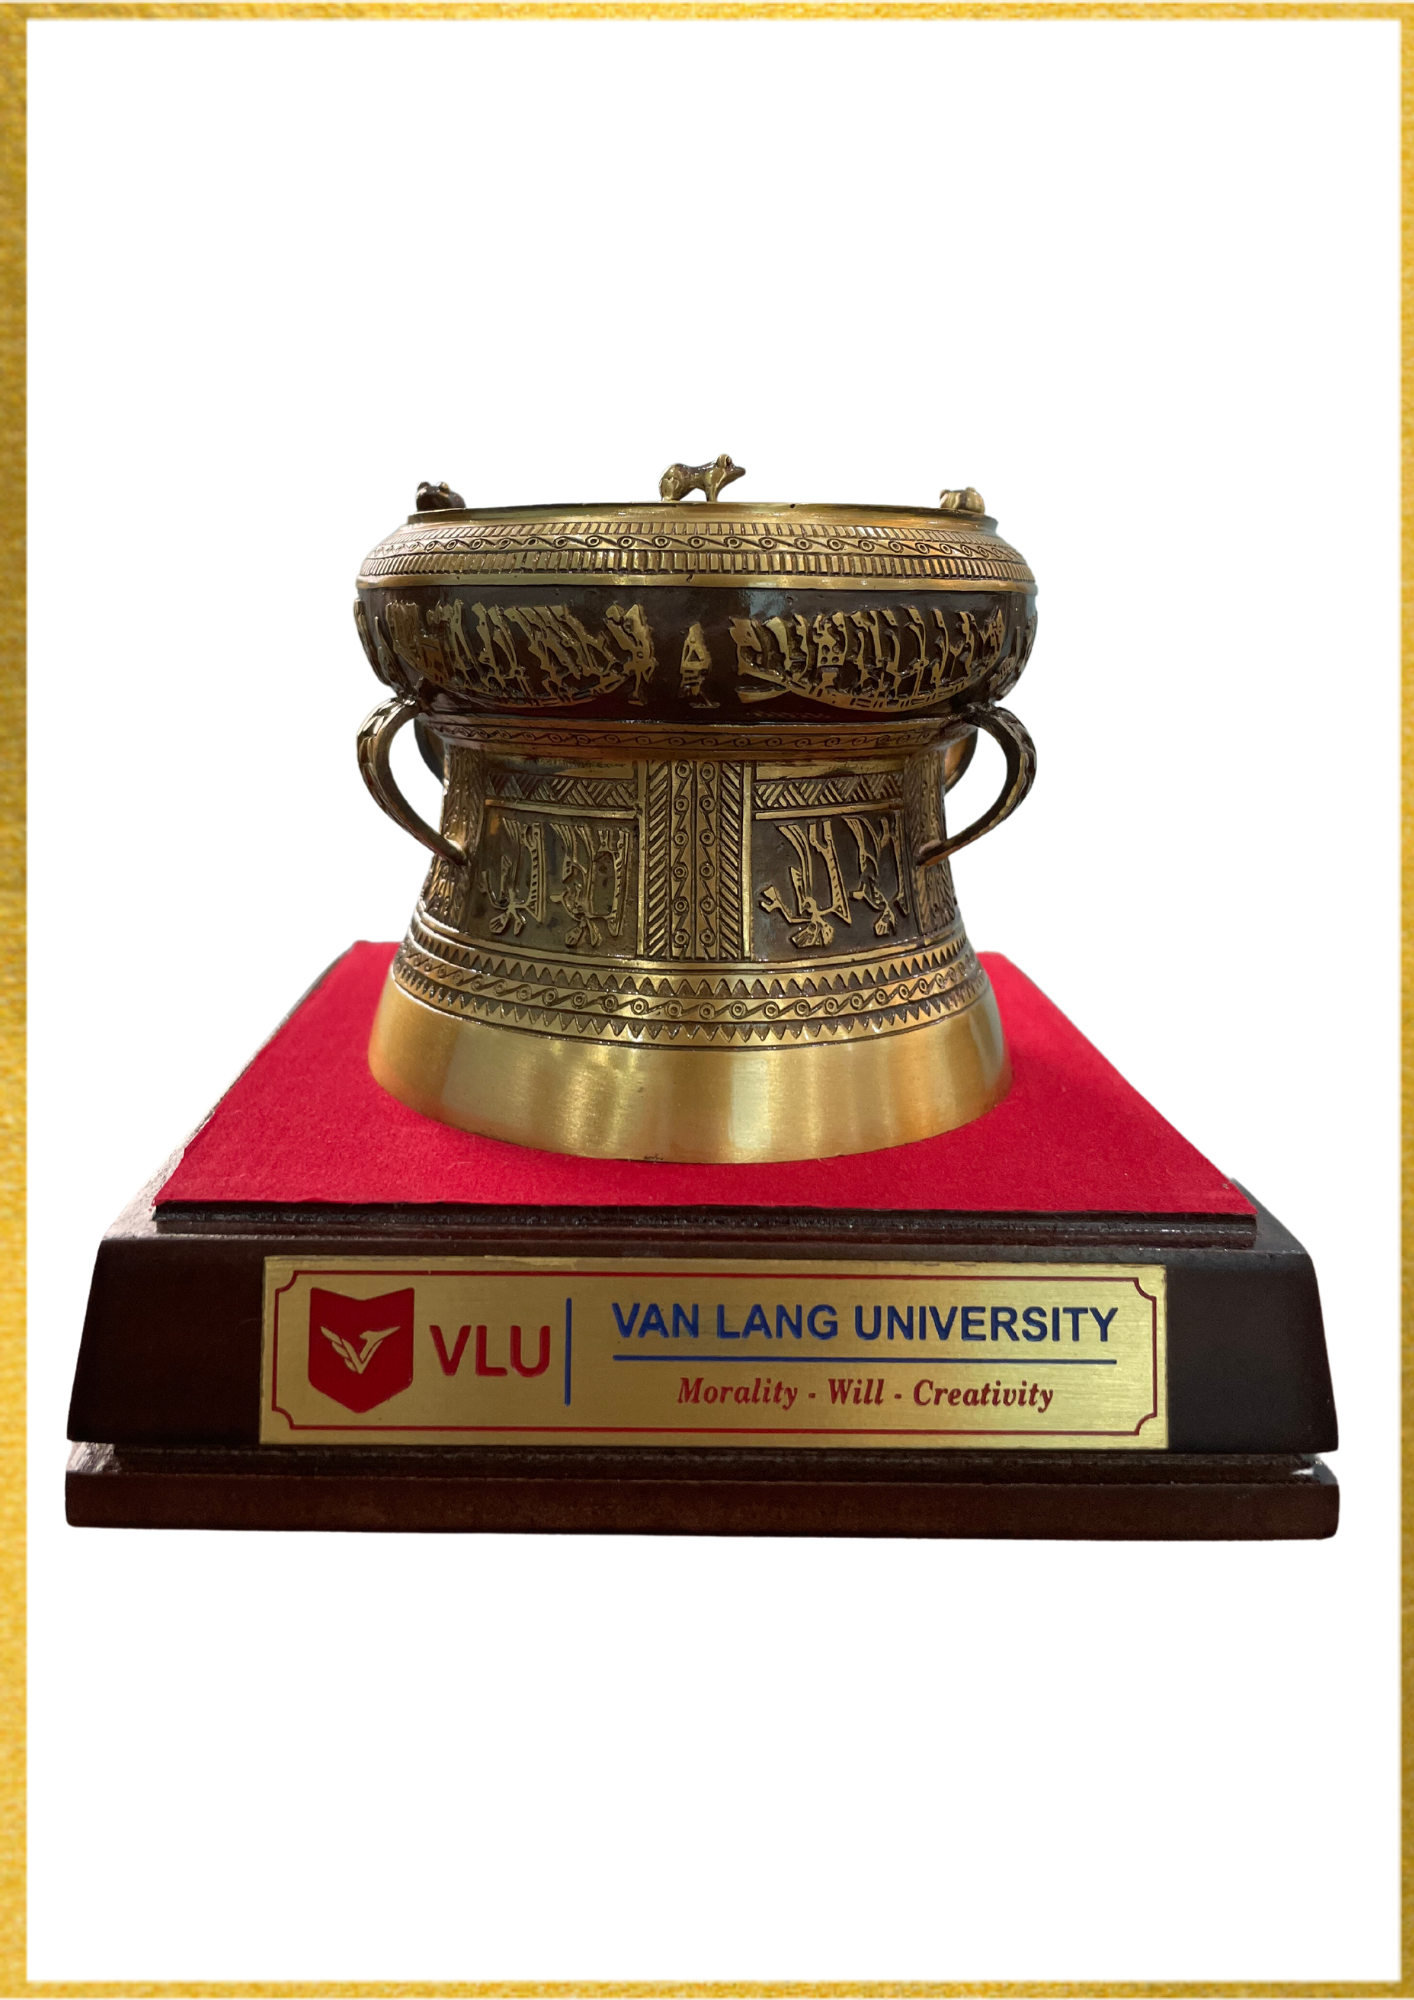 Award from Van Lang University